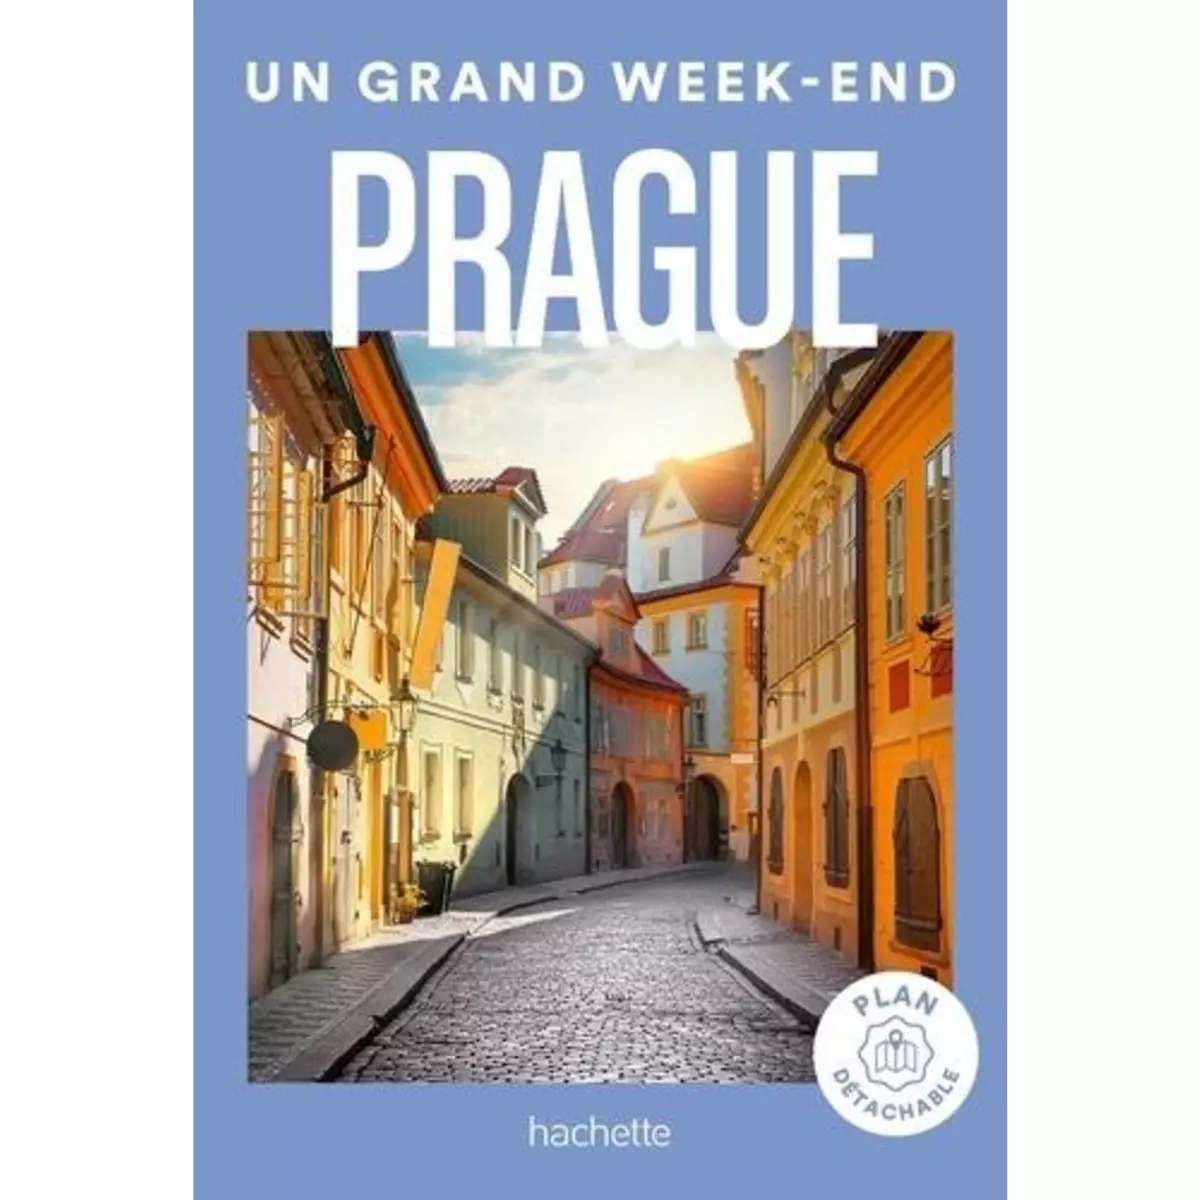  UN GRAND WEEK-END A PRAGUE, Hachette tourisme